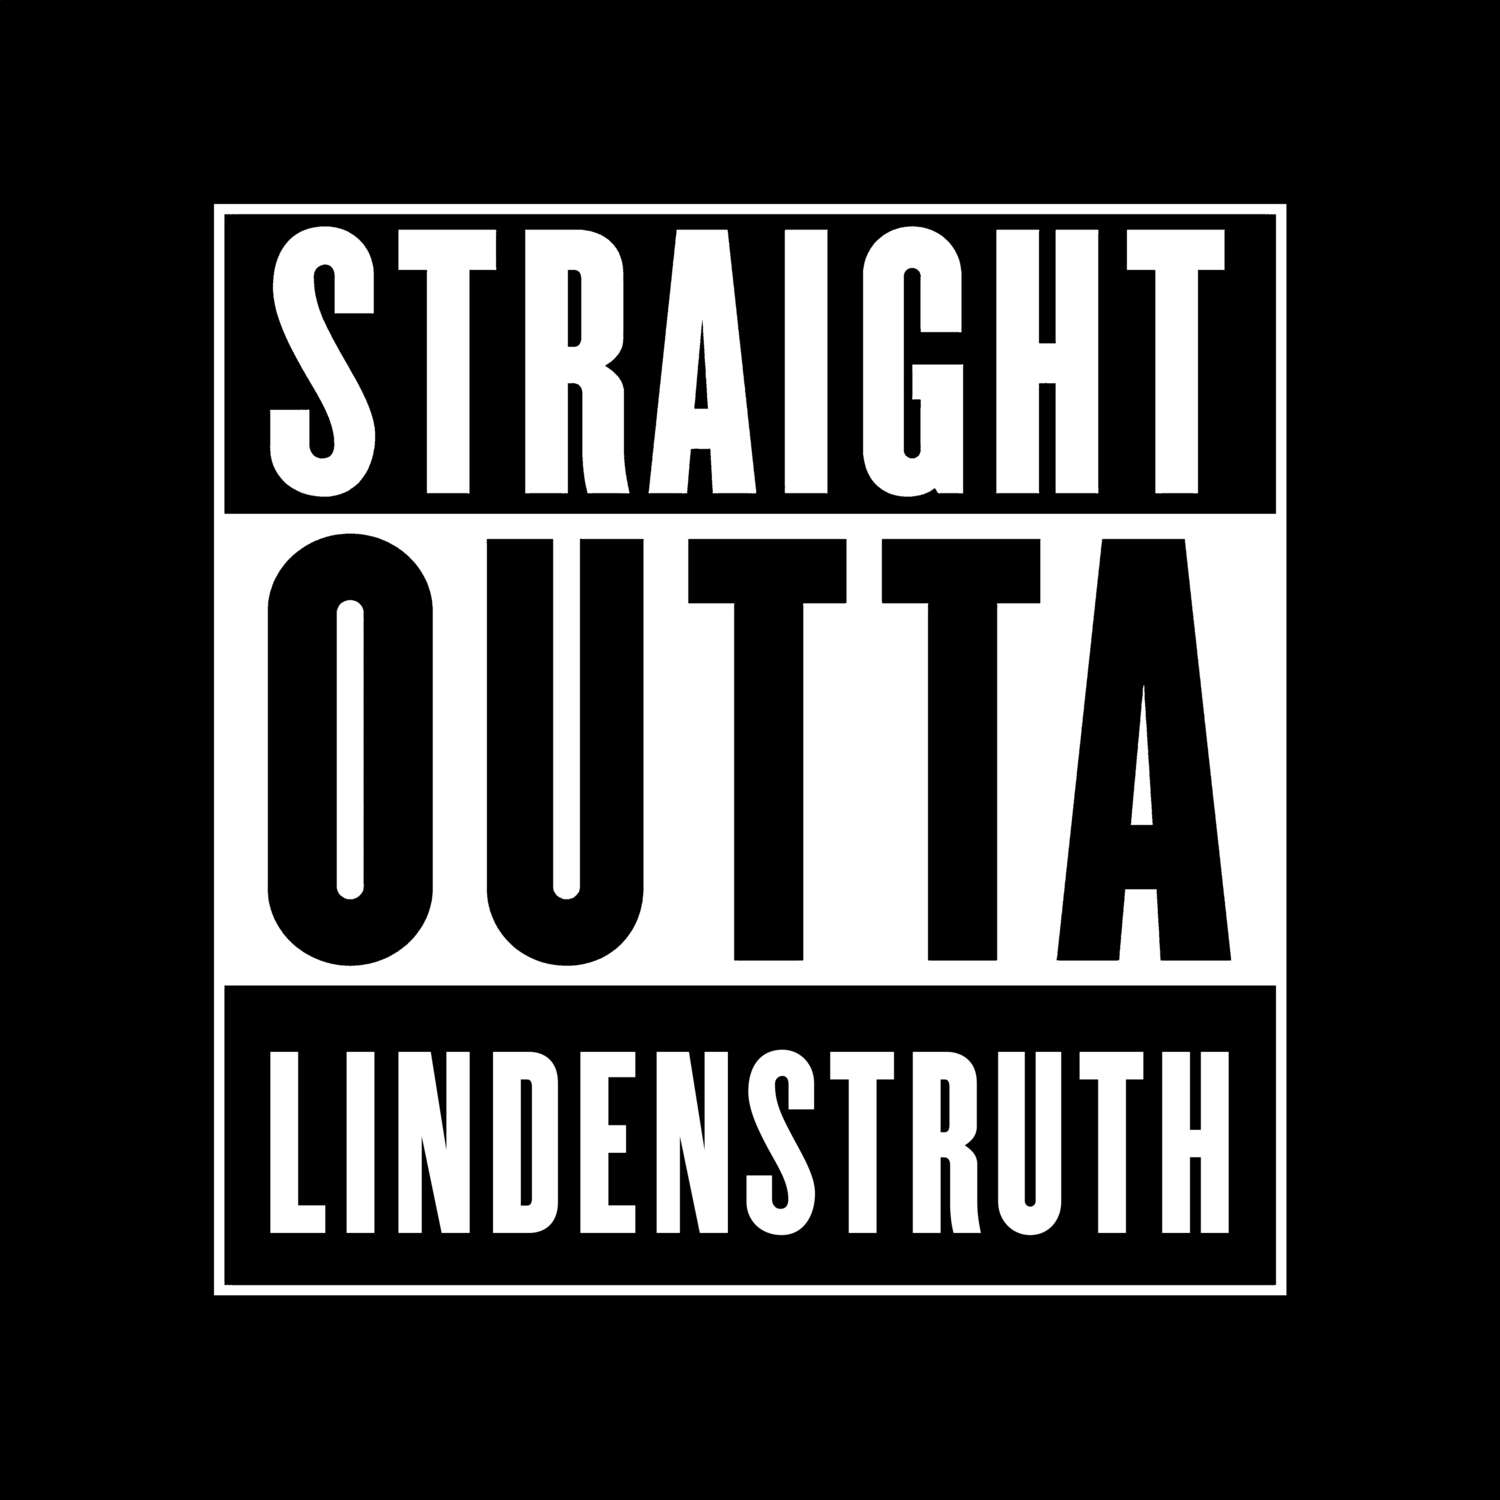 Lindenstruth T-Shirt »Straight Outta«